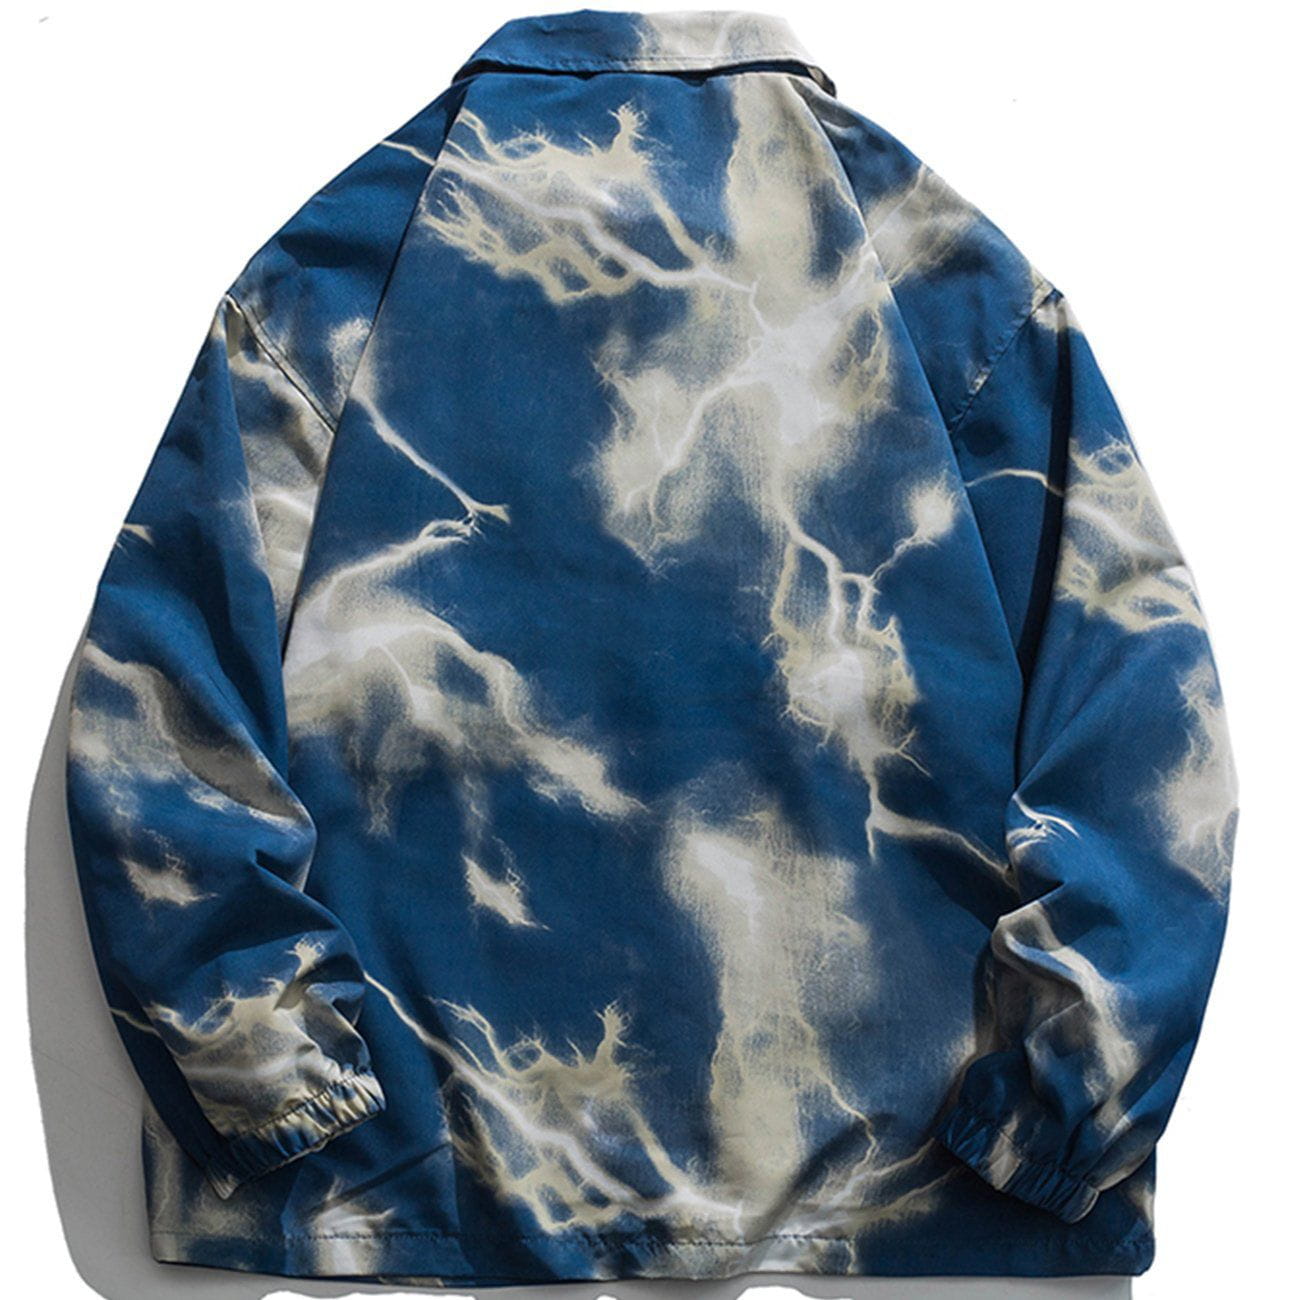 Majesda® - Full Print Lightning Jacket outfit ideas, streetwear fashion - majesda.com